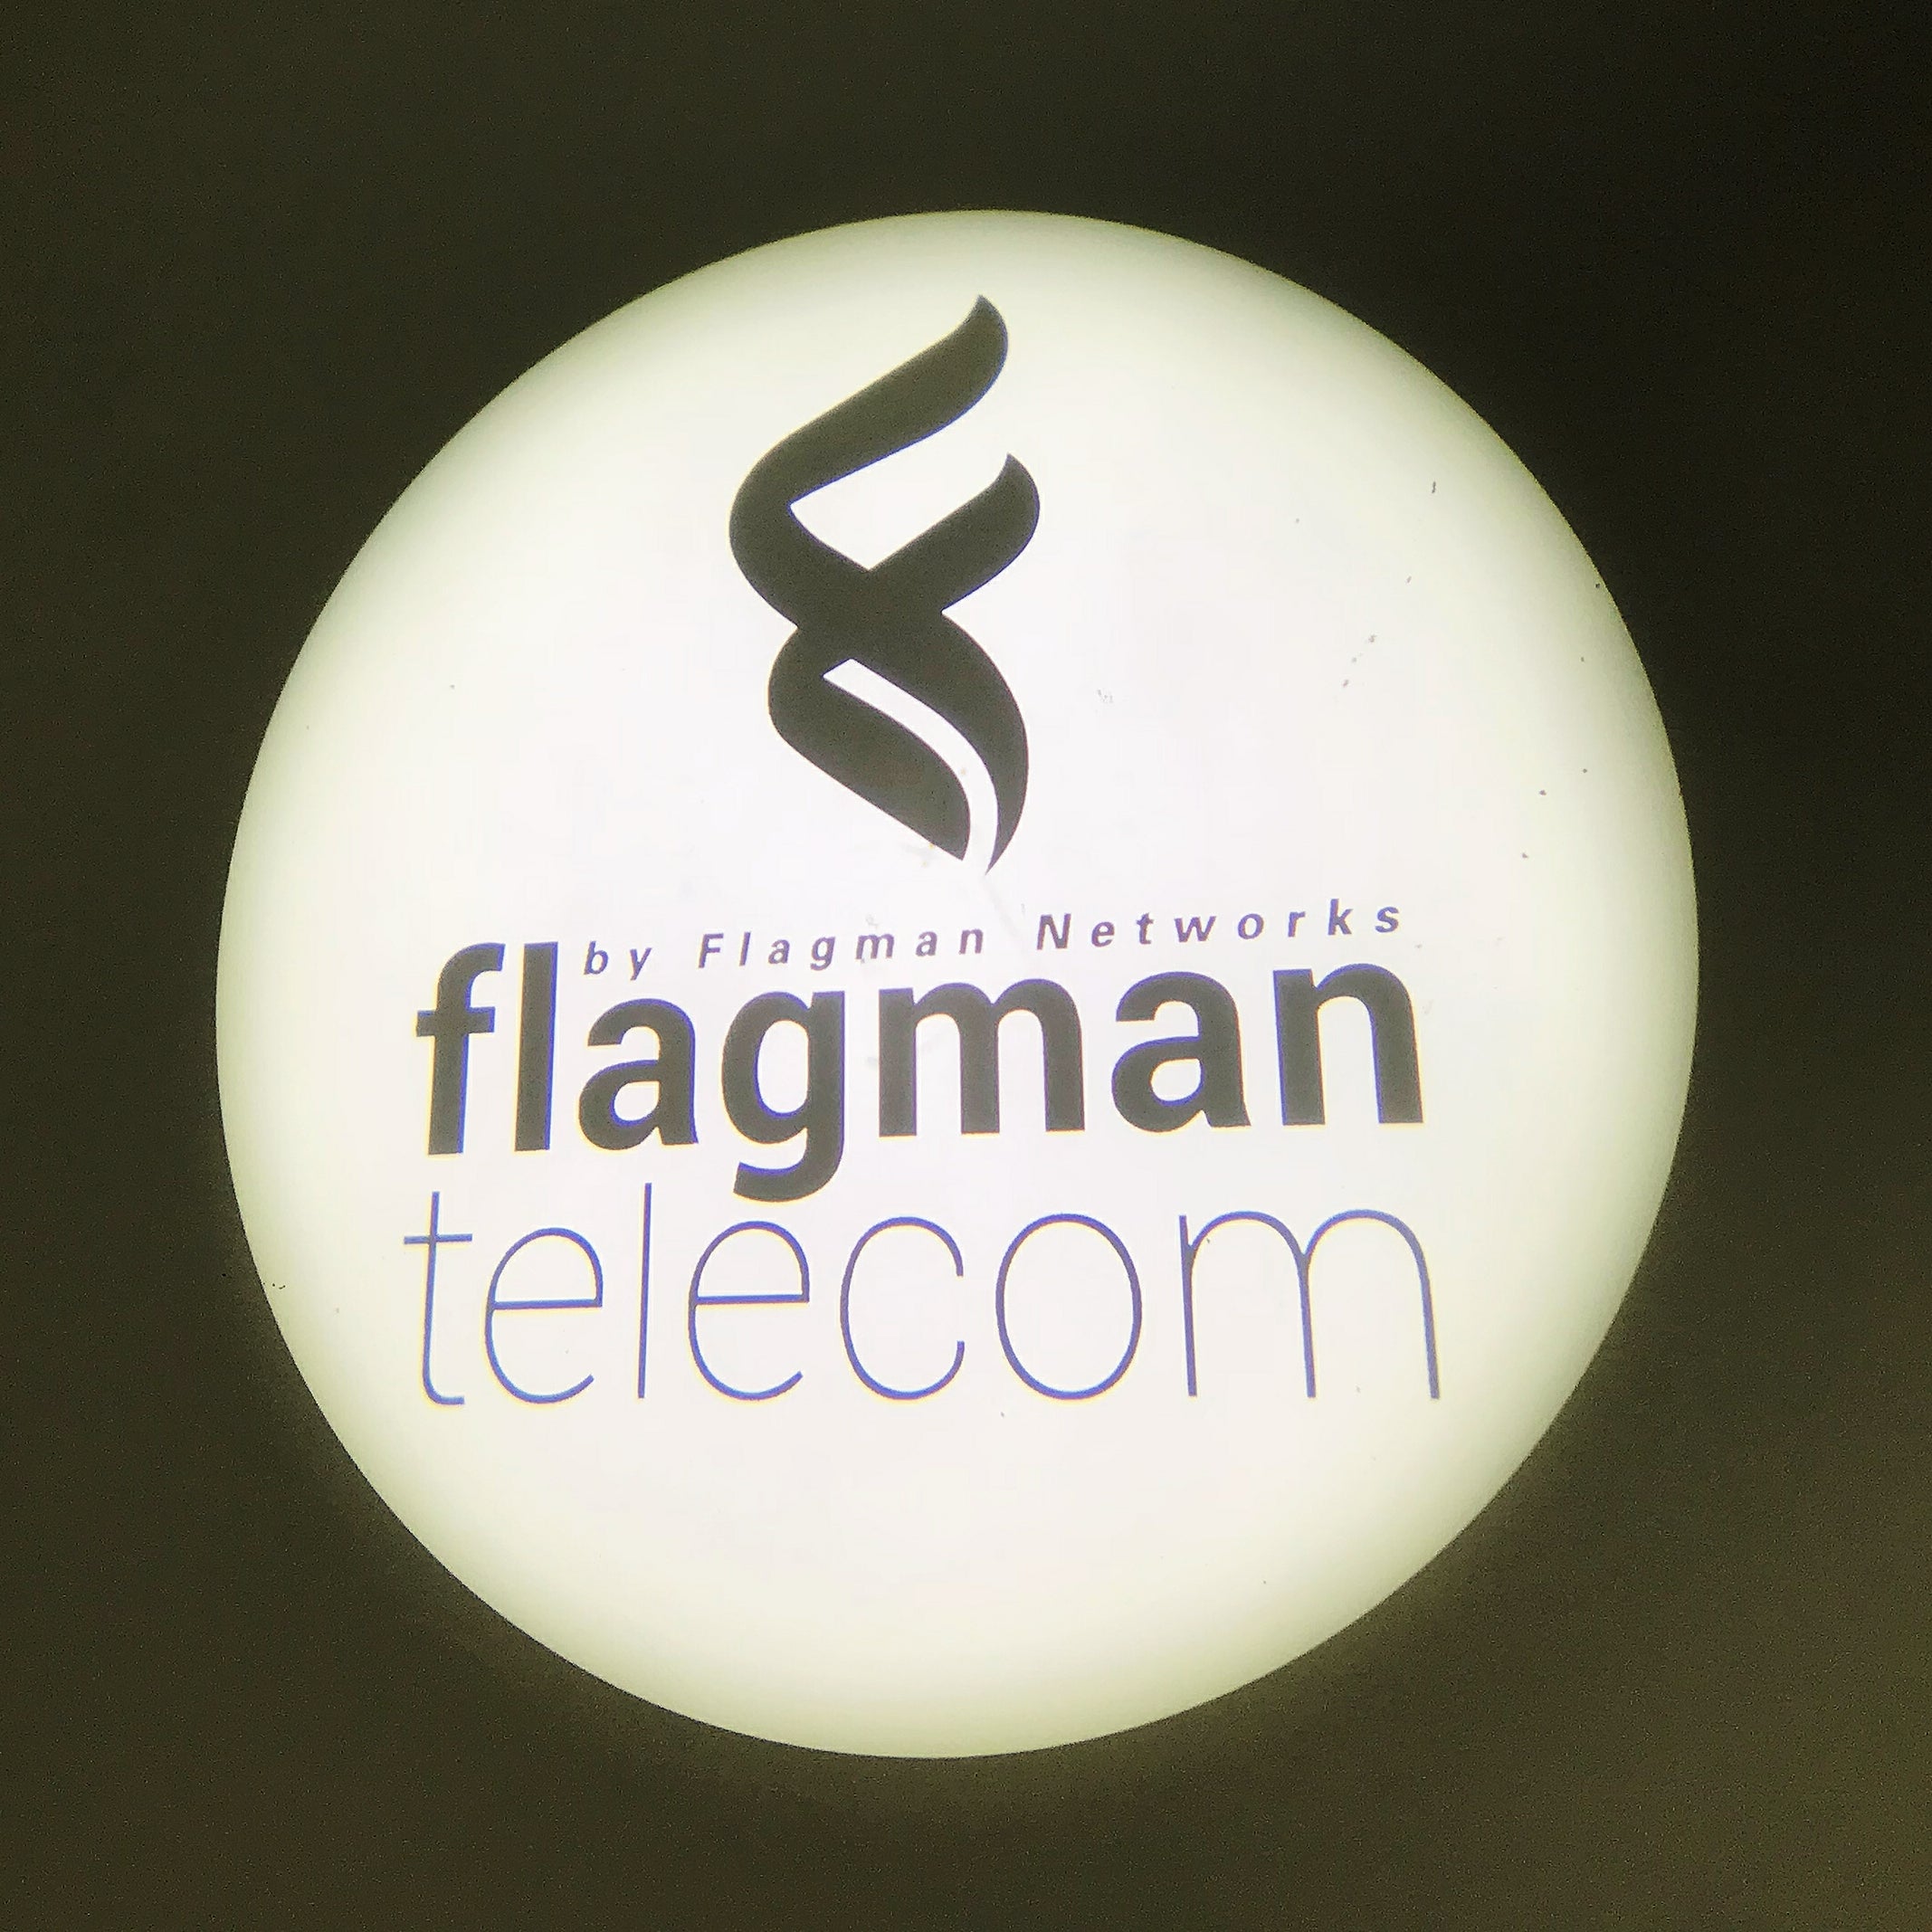 8th April 2018—Flagman telecom